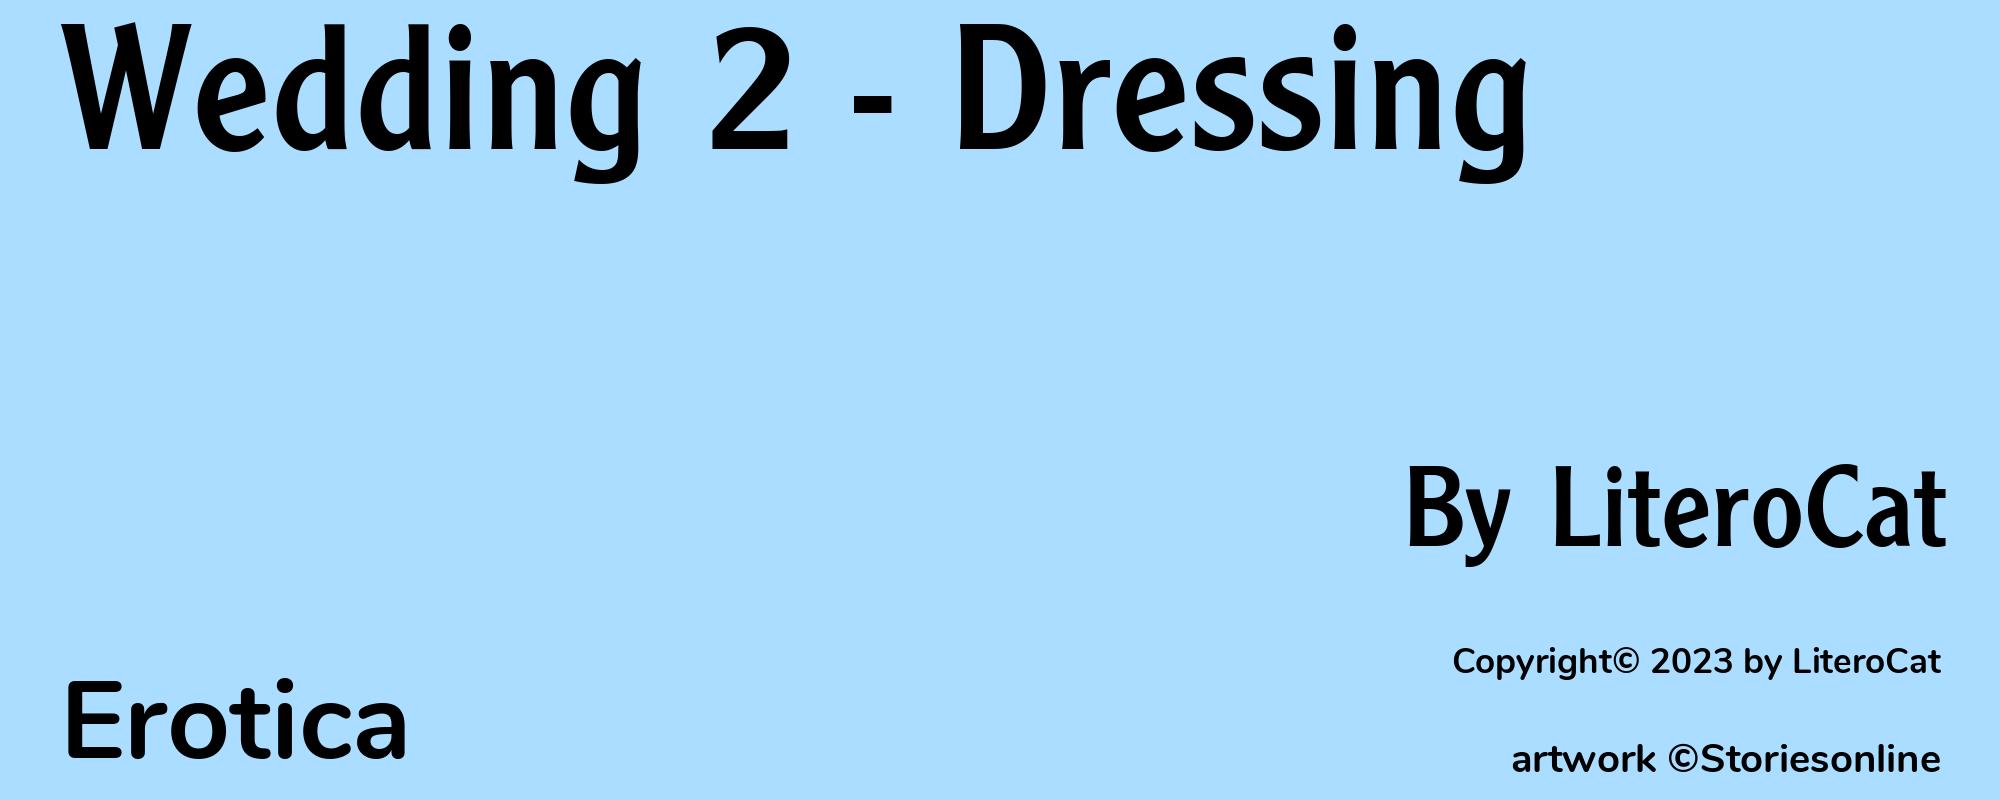 Wedding 2 - Dressing - Cover